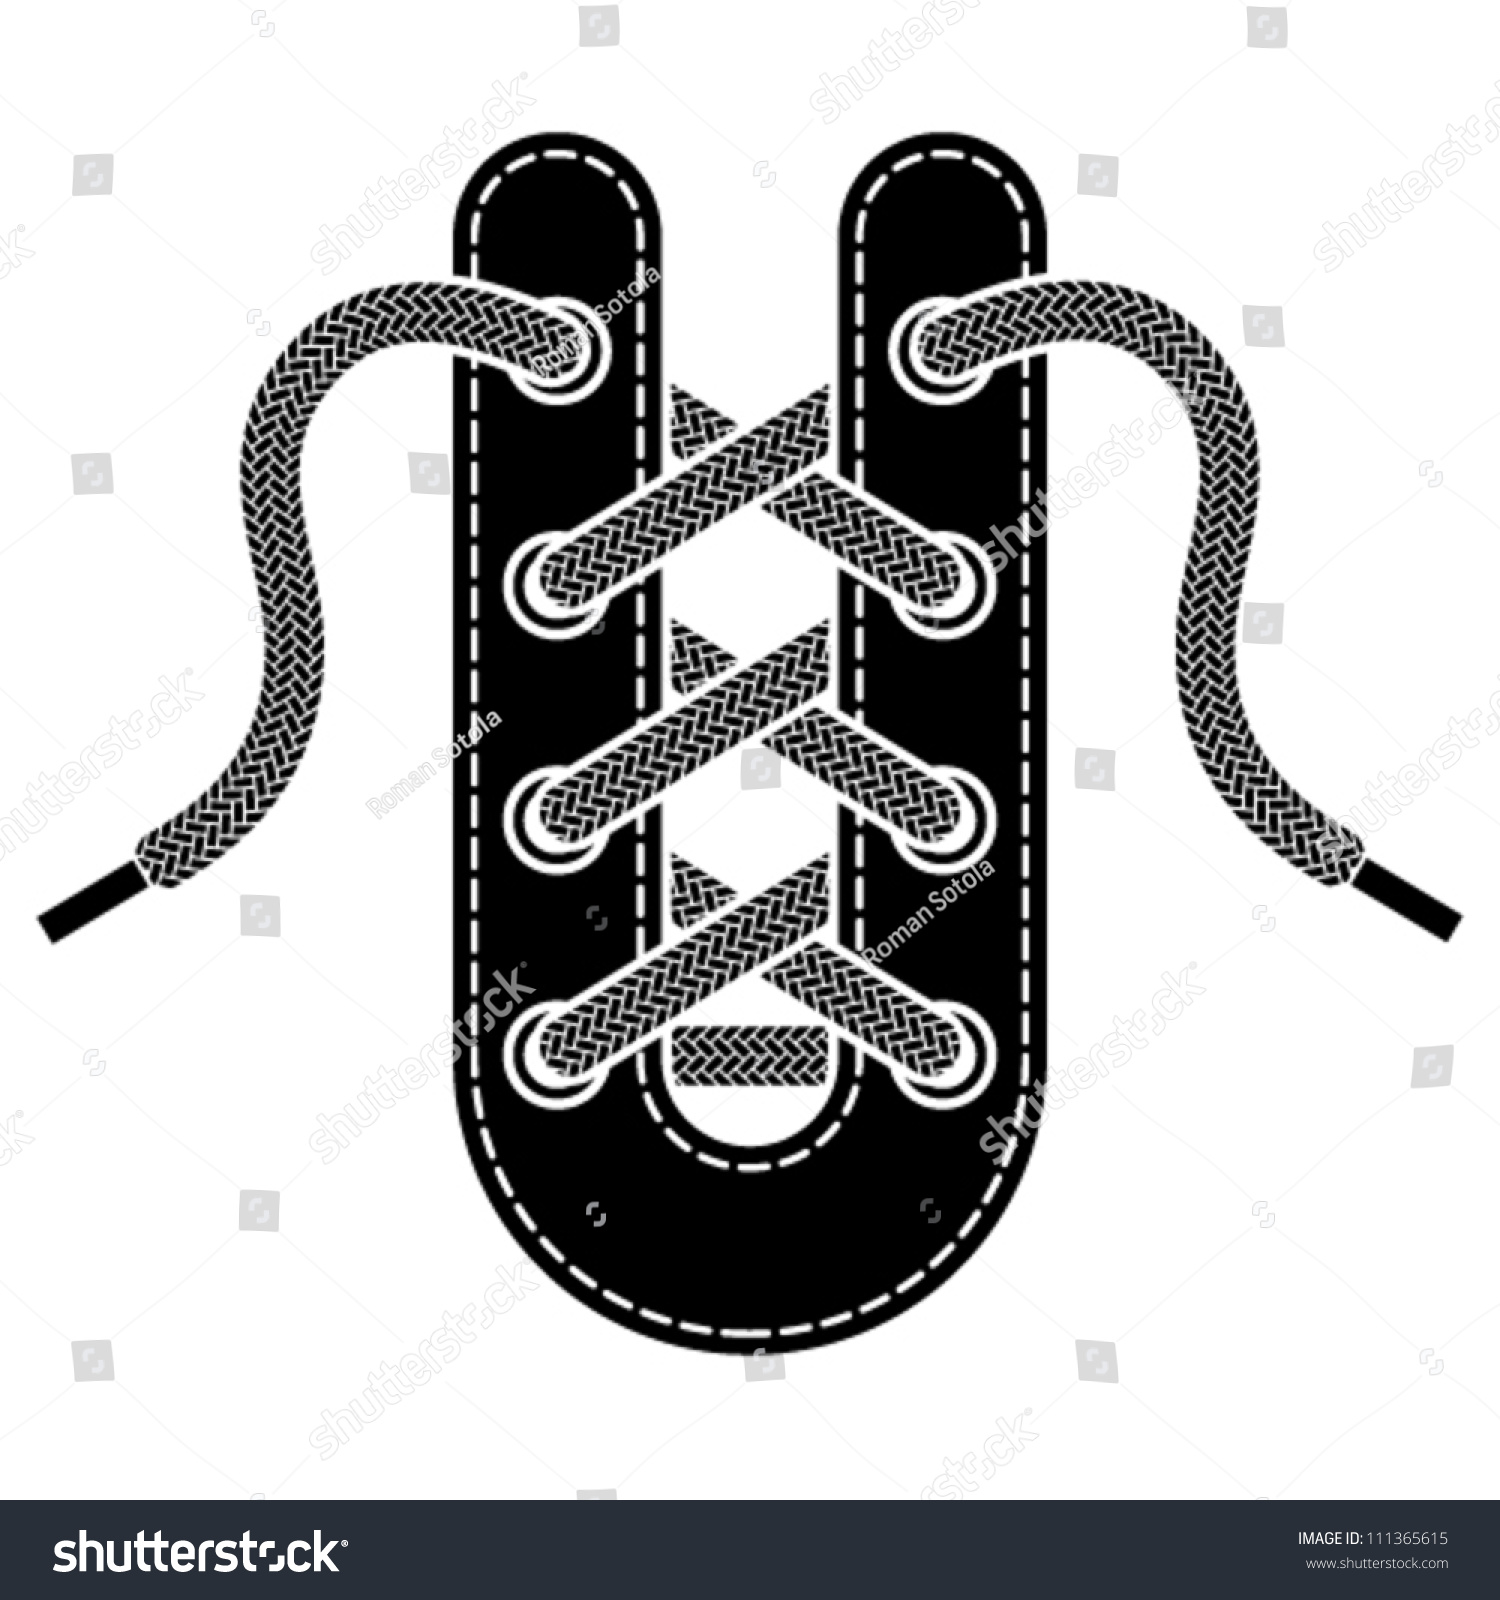 Vector Shoe Lace Symbol - 111365615 : Shutterstock